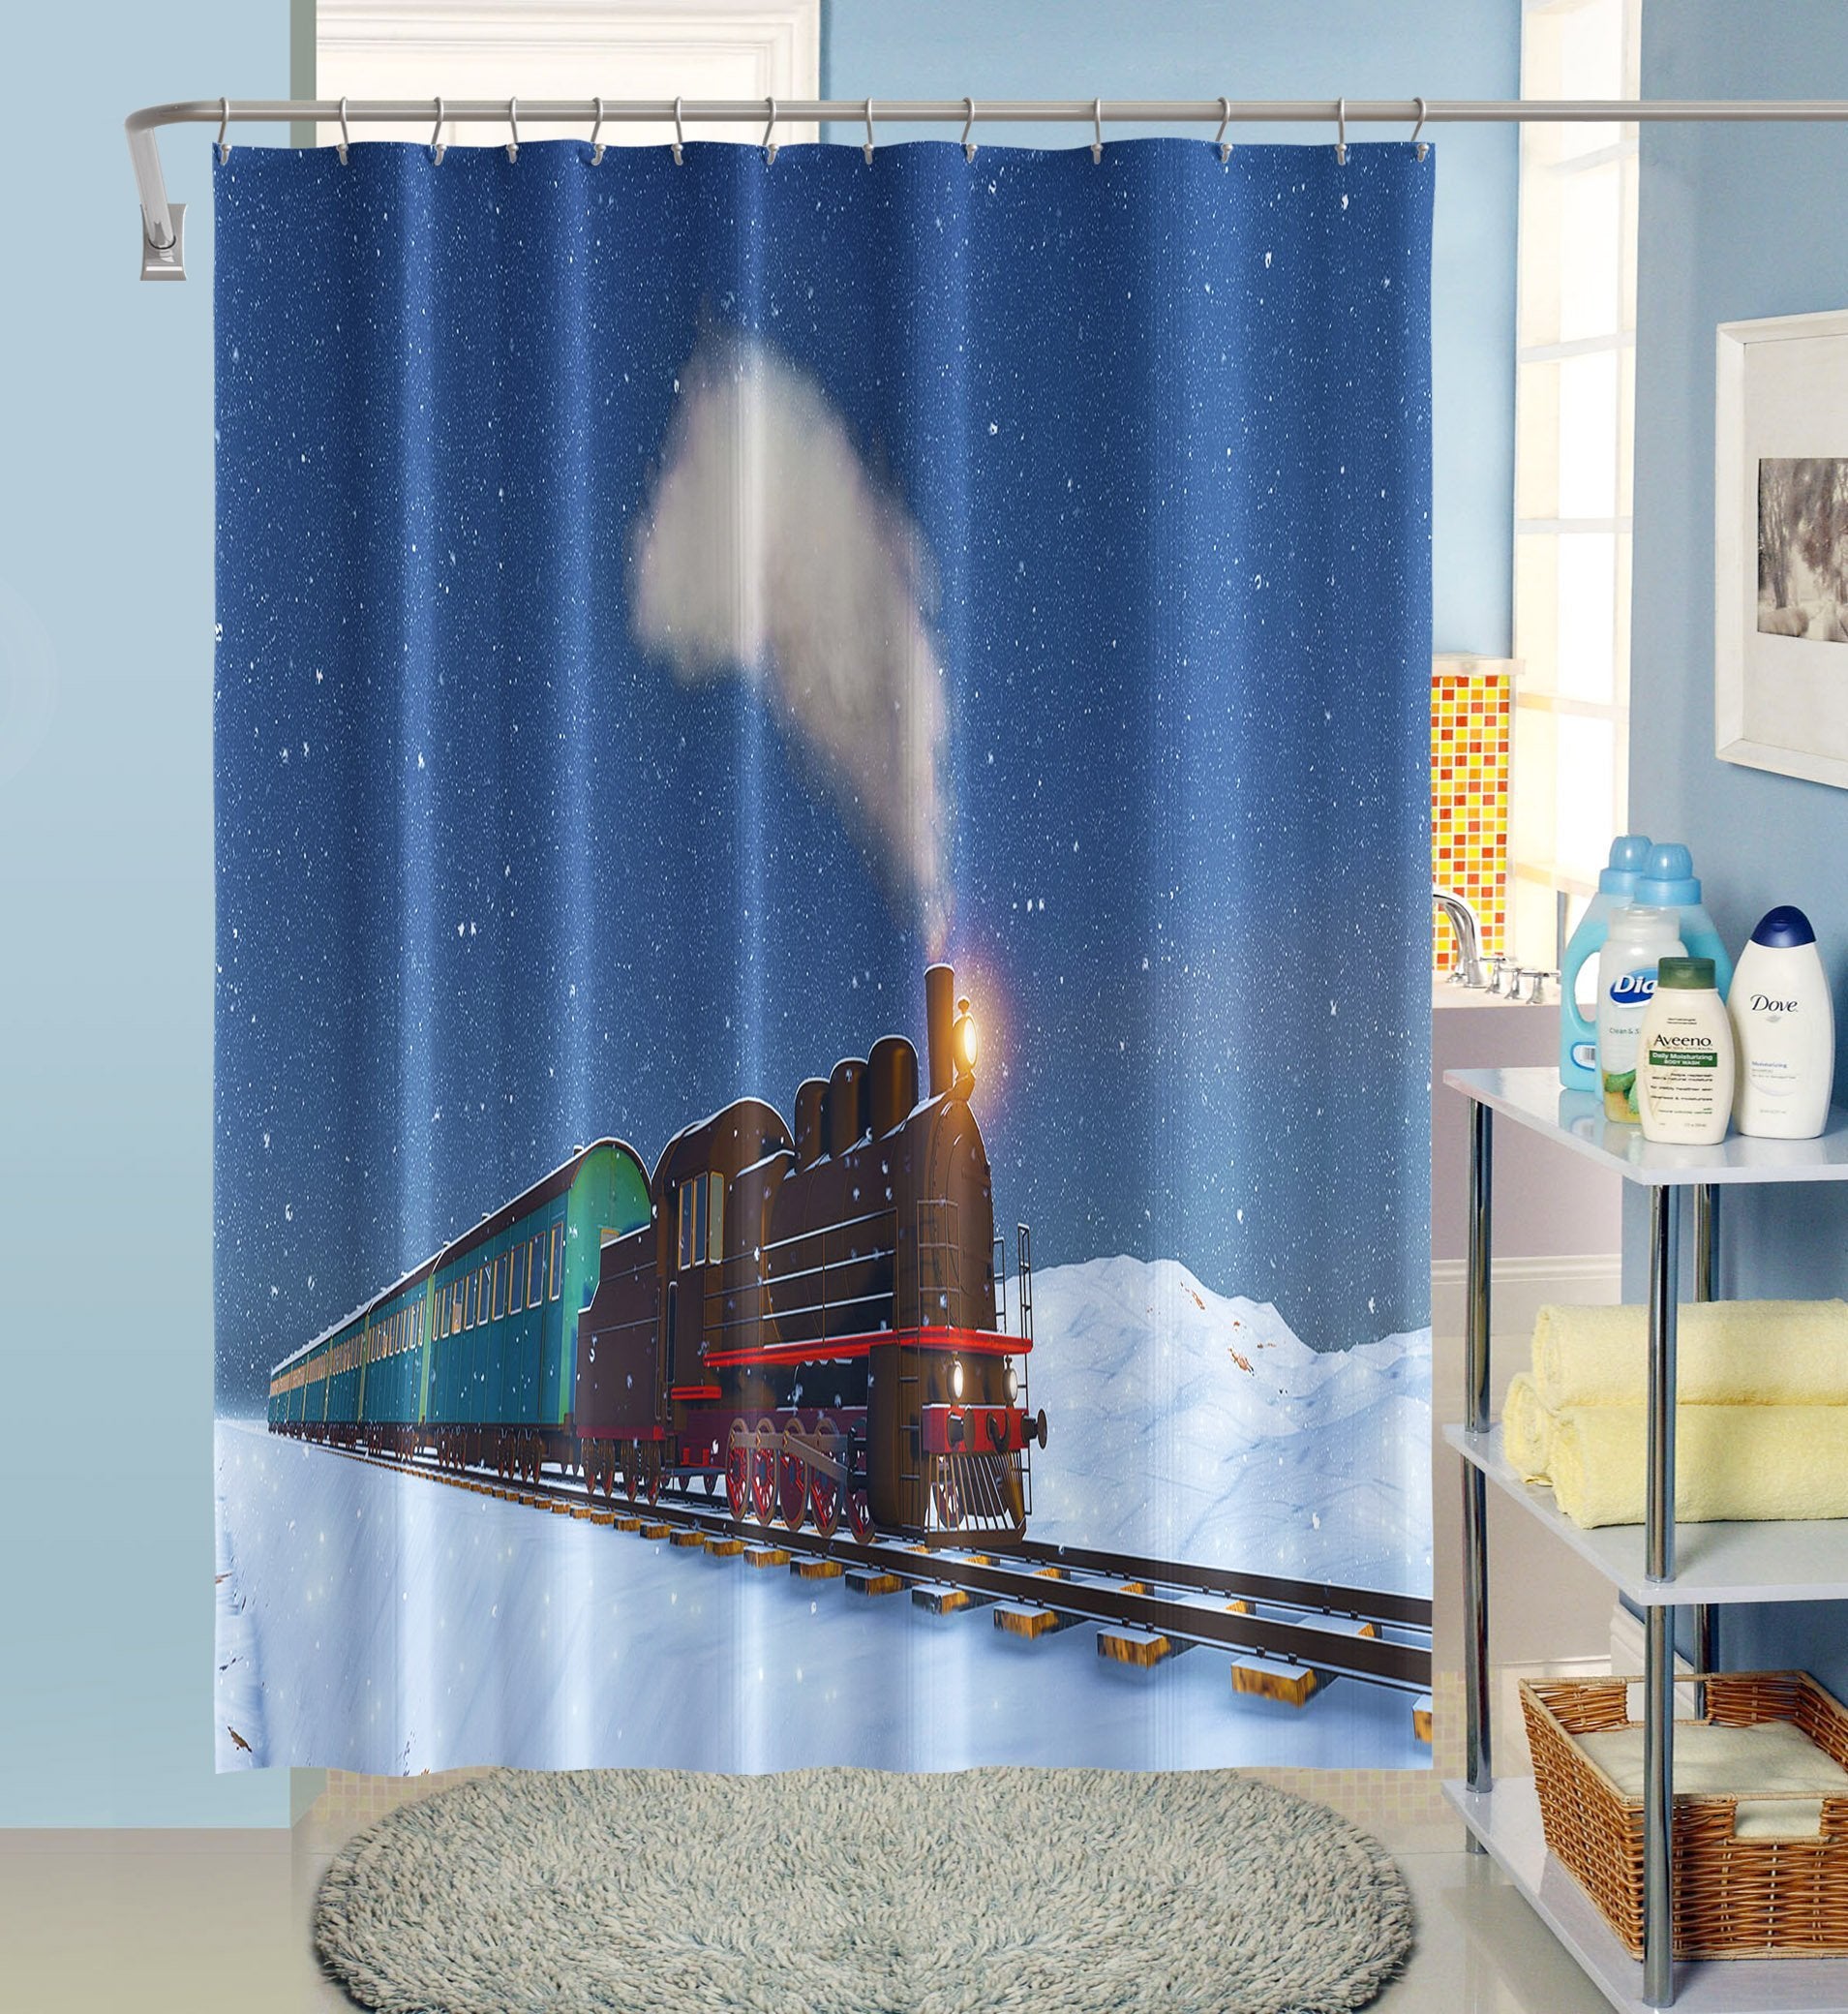 3D Train Smoke 038 Shower Curtain 3D Shower Curtain AJ Creativity Home 